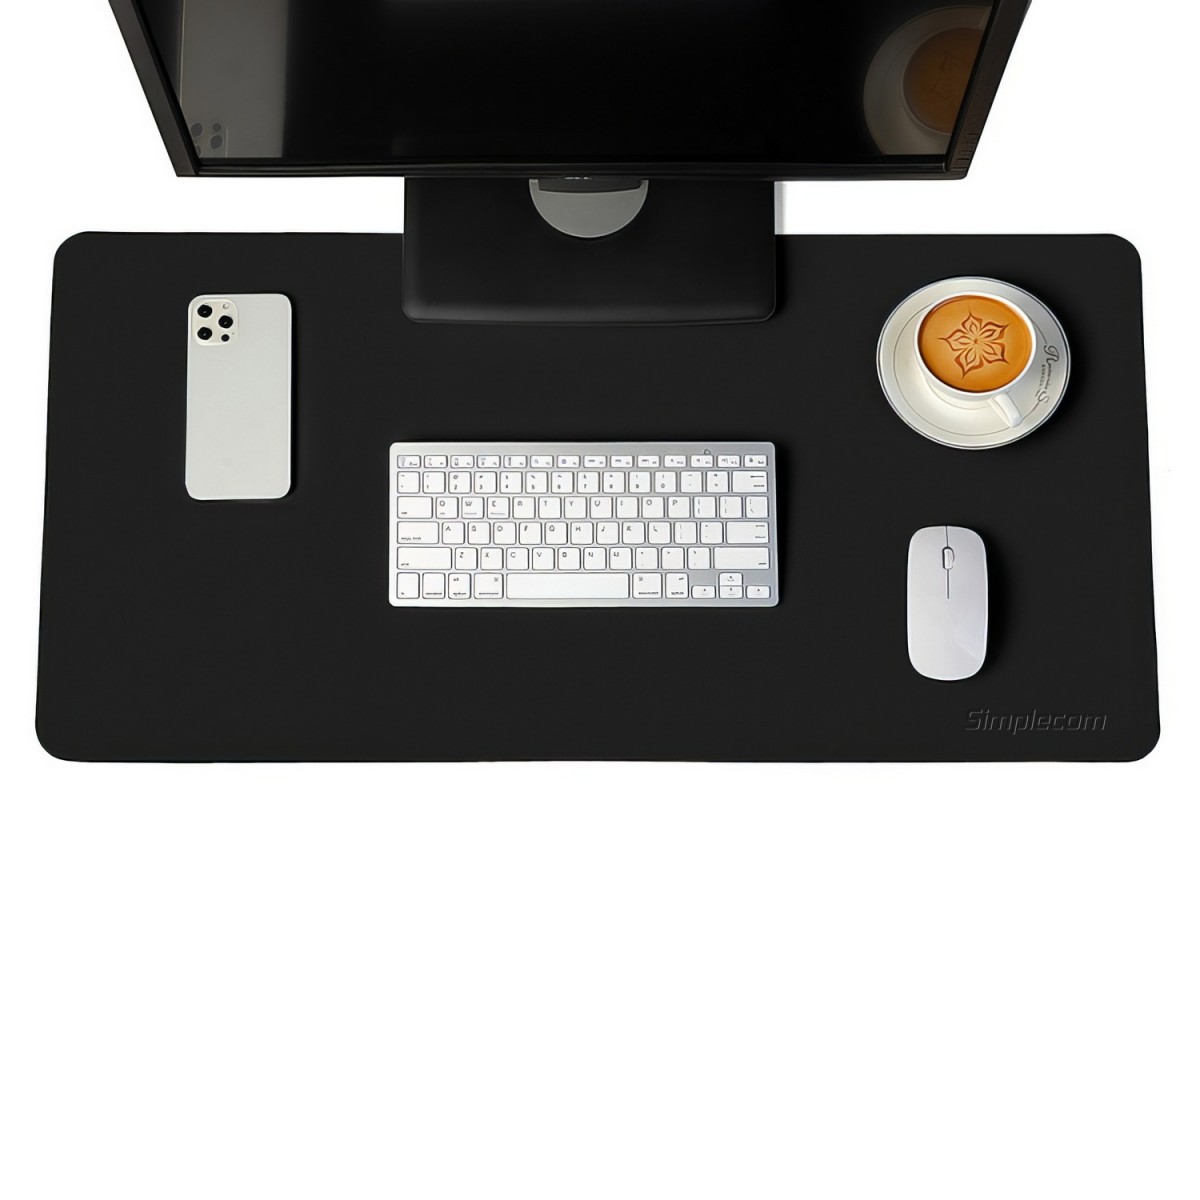  Desk Mouse Pad Non-Slip PU Leather 80x40cm - Black  